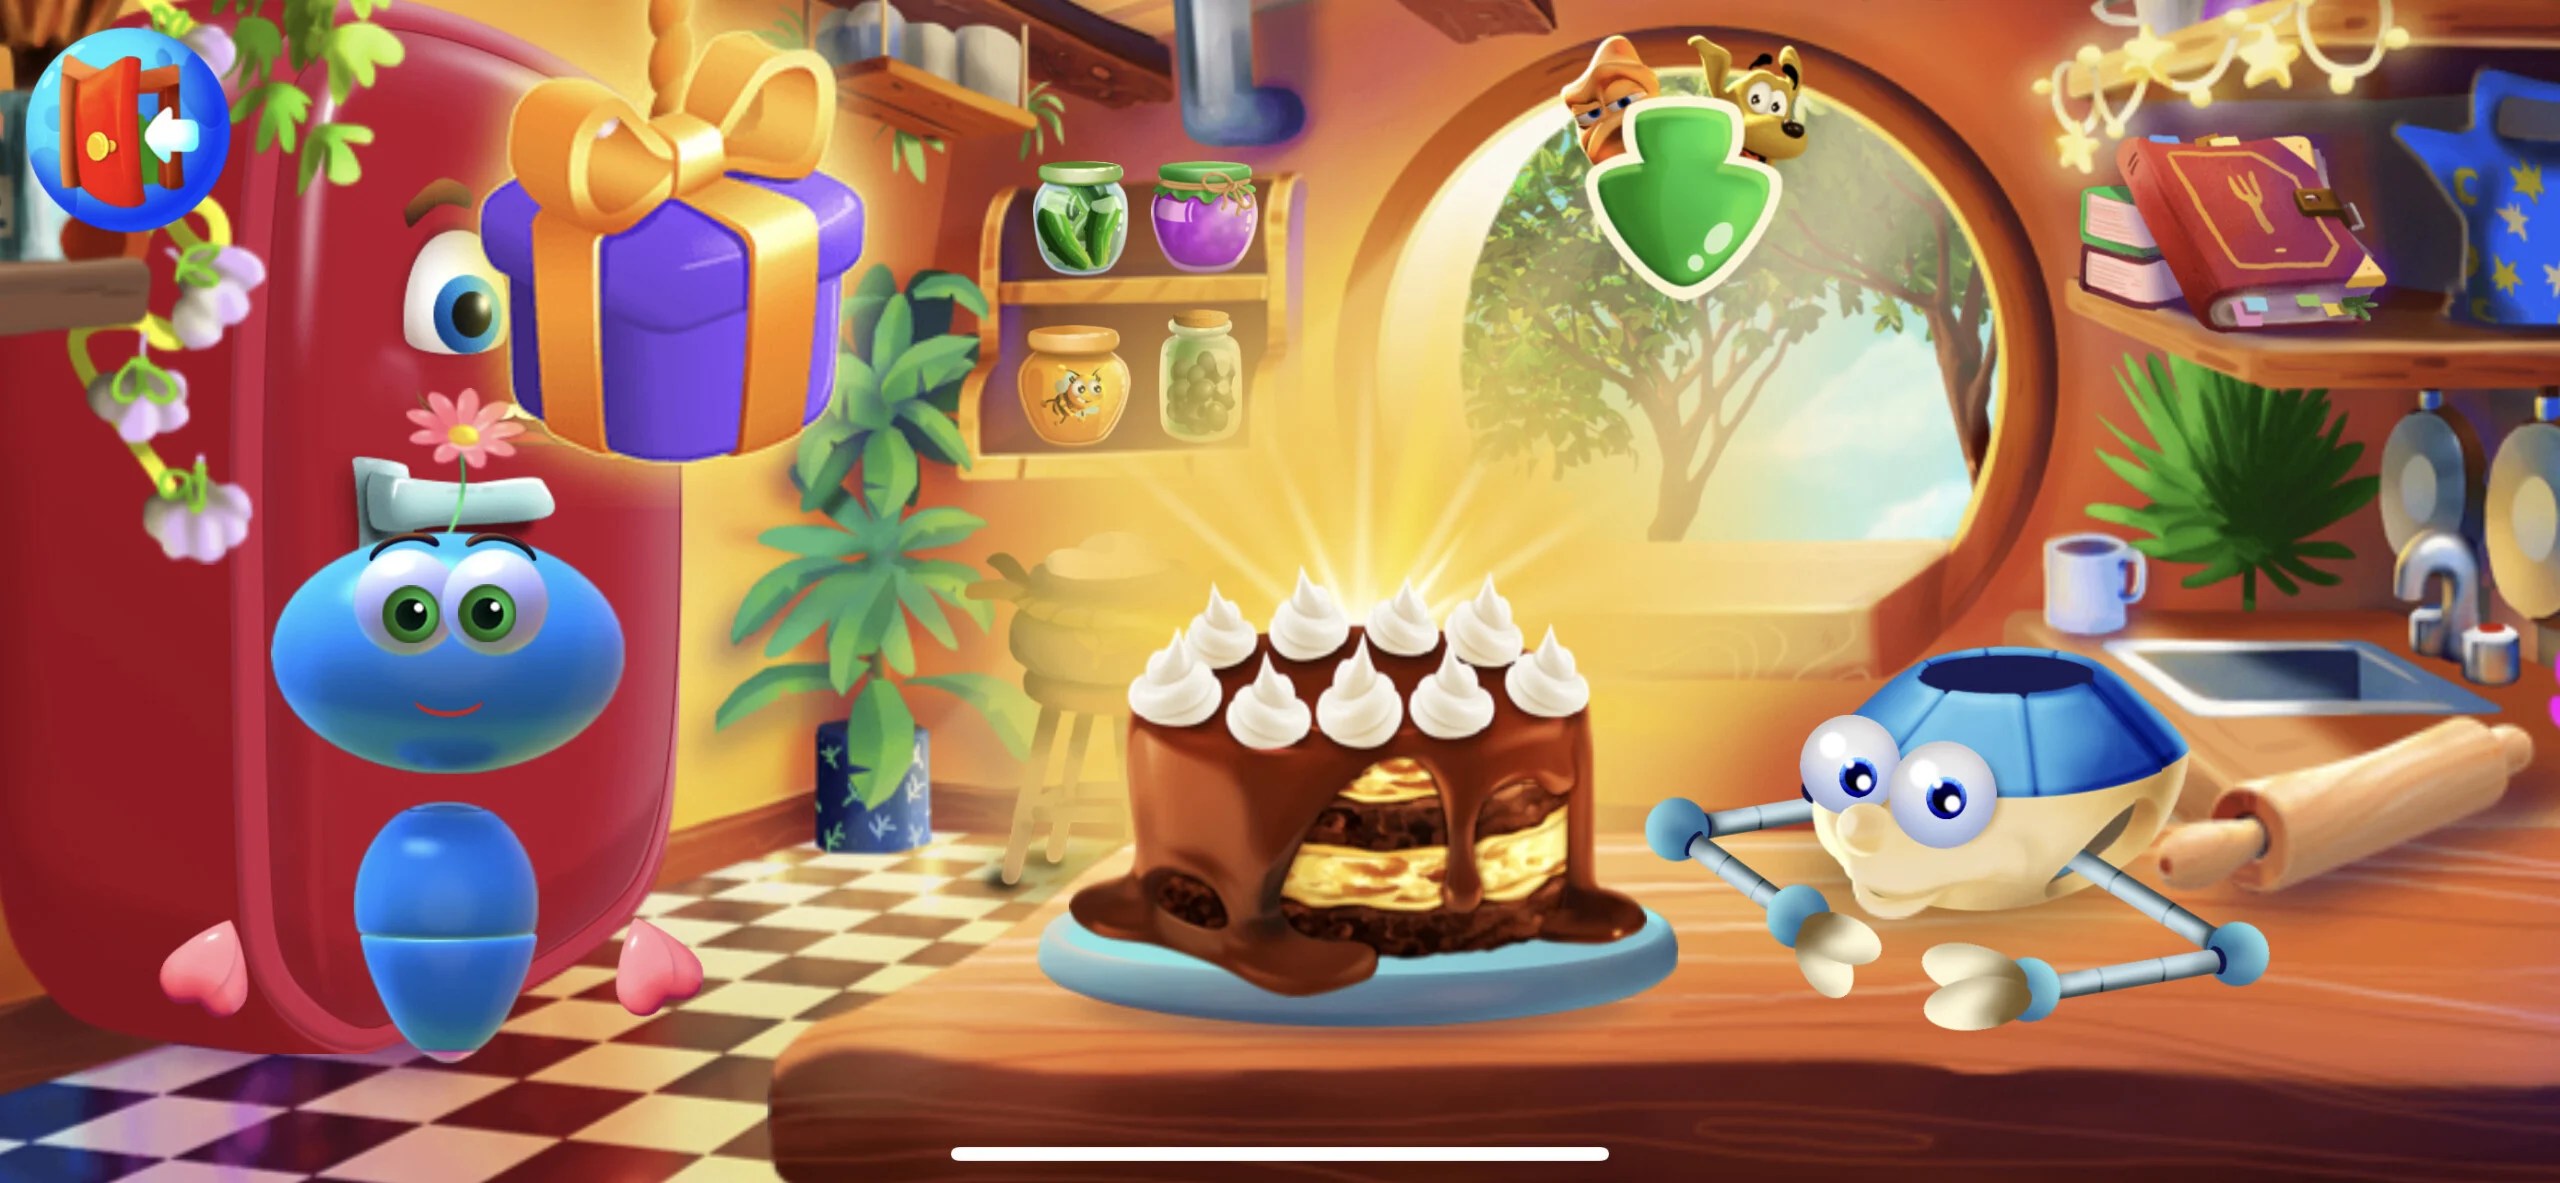 Et hop ! Un joli gâteau fait en cuisine // Source : Ubisoft - Wiloki